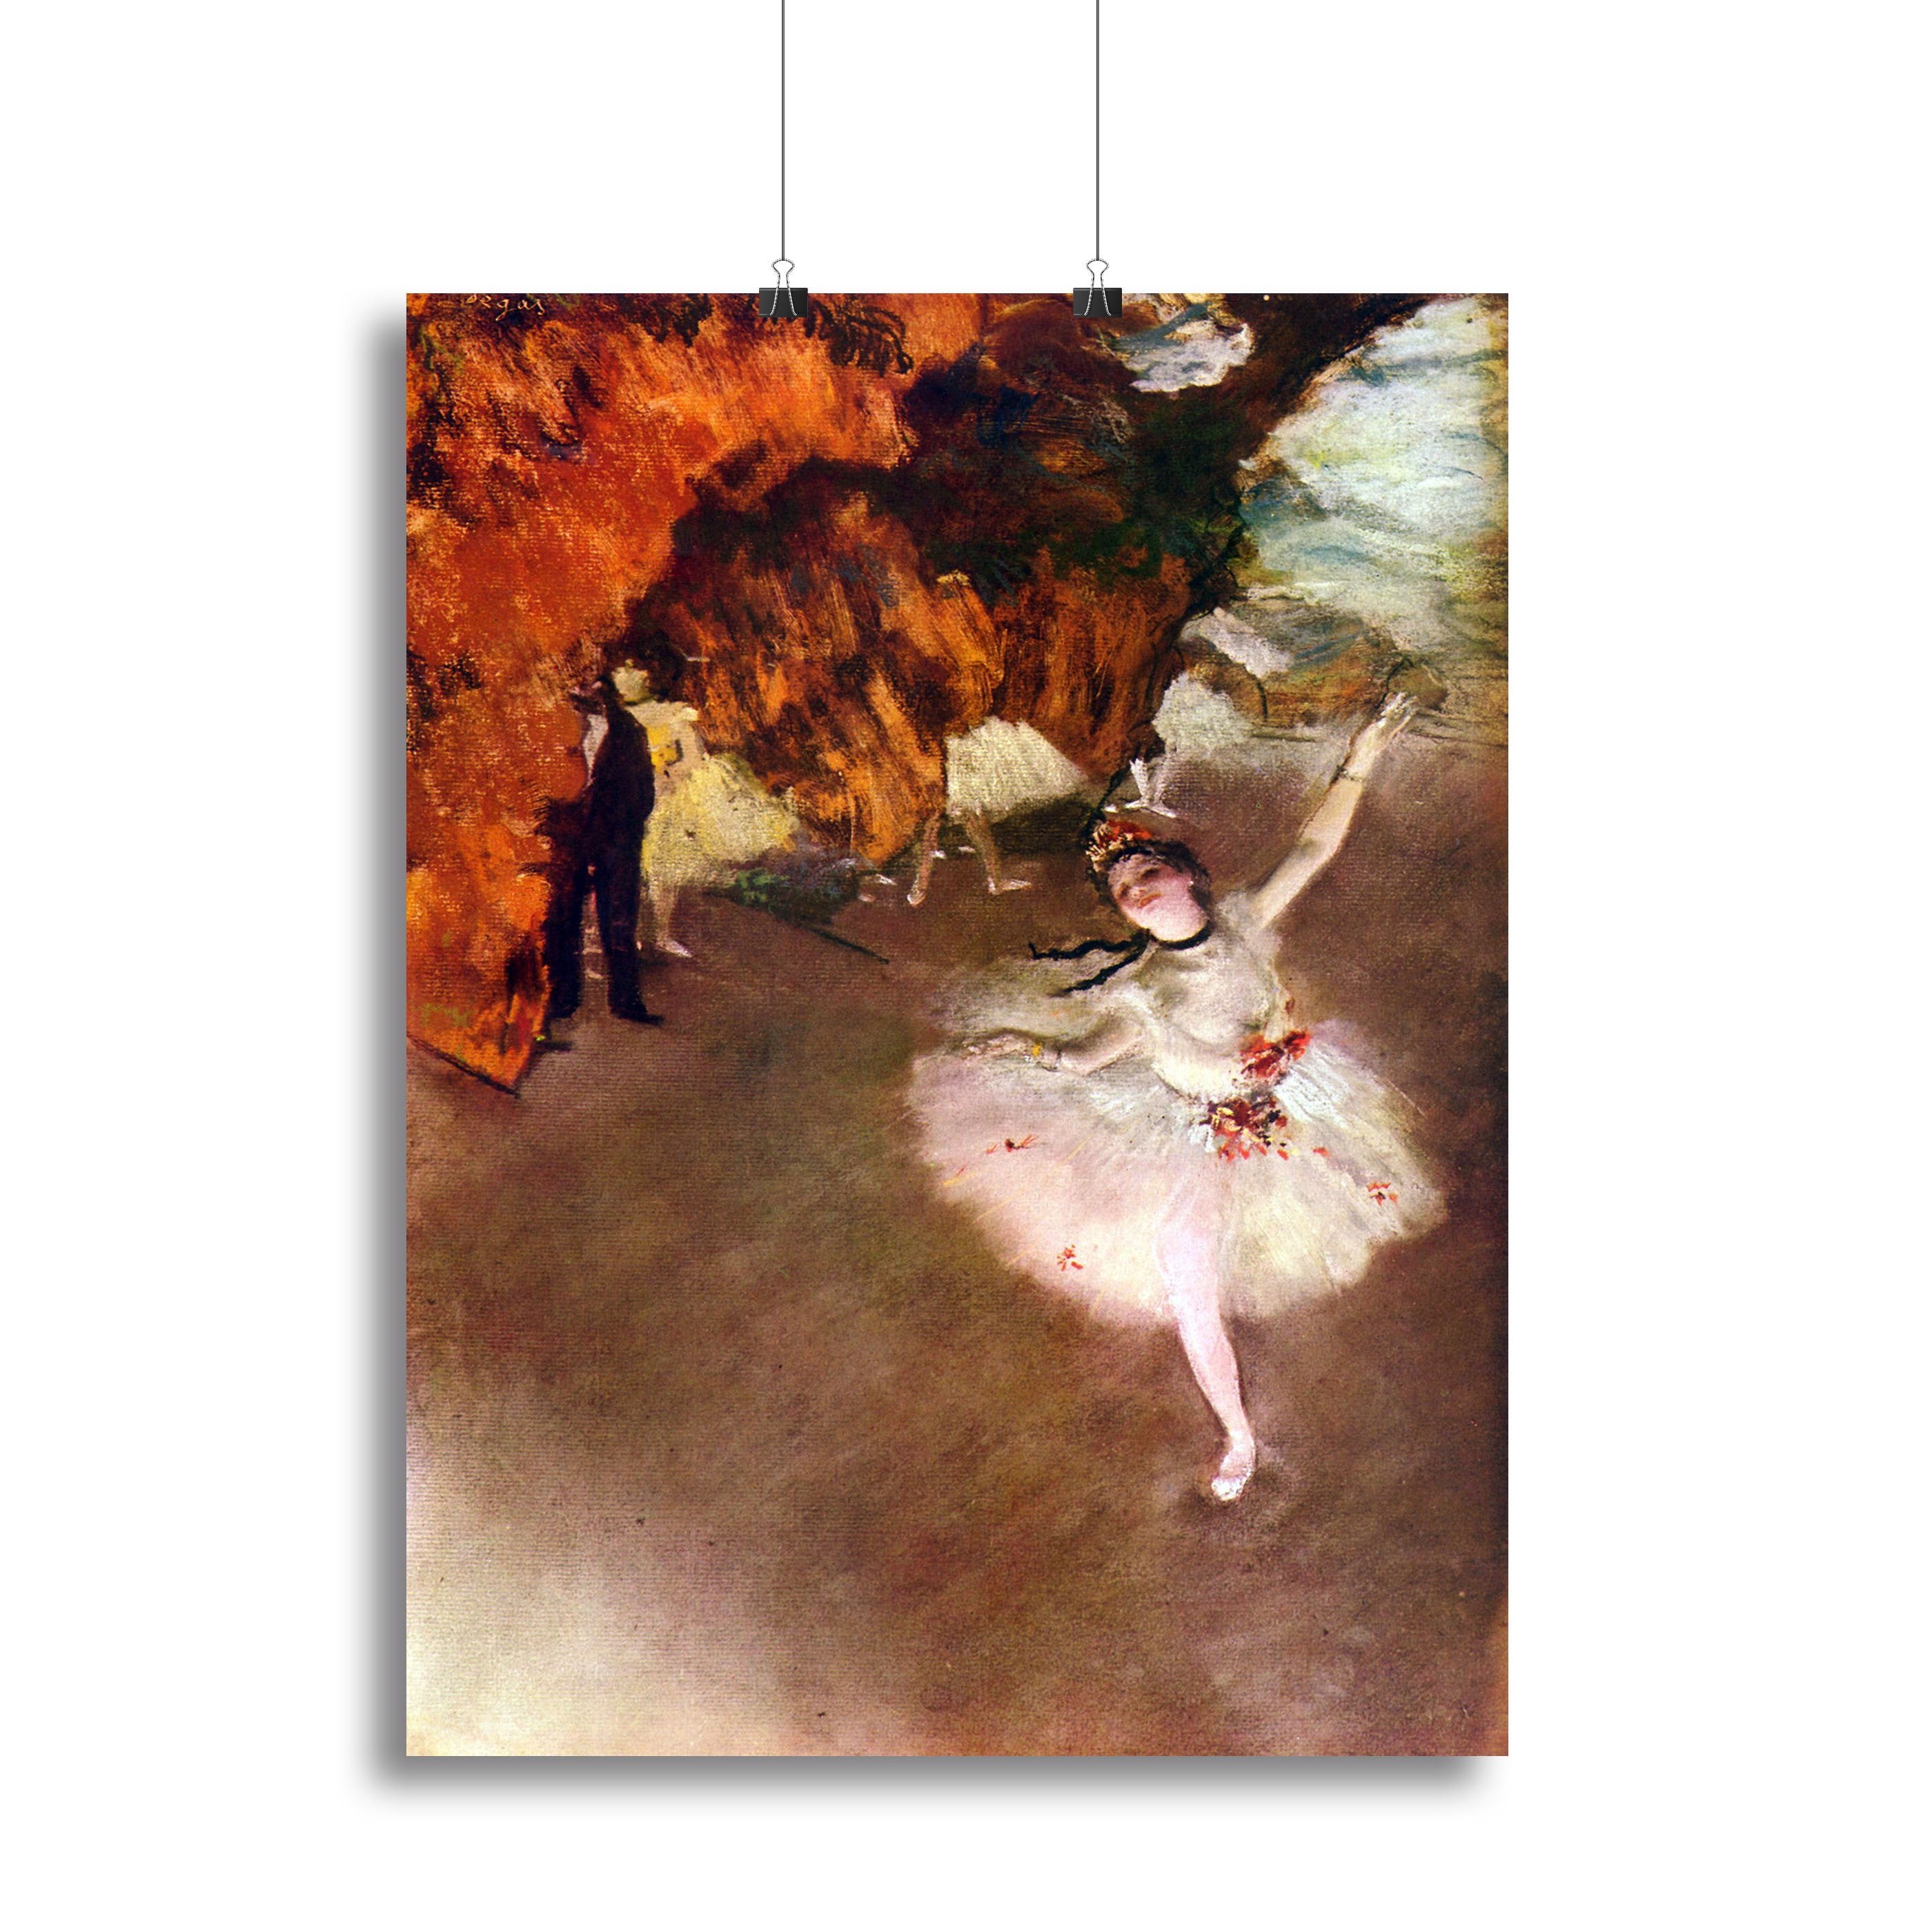 Prima Ballerina by Degas Canvas Print or Poster